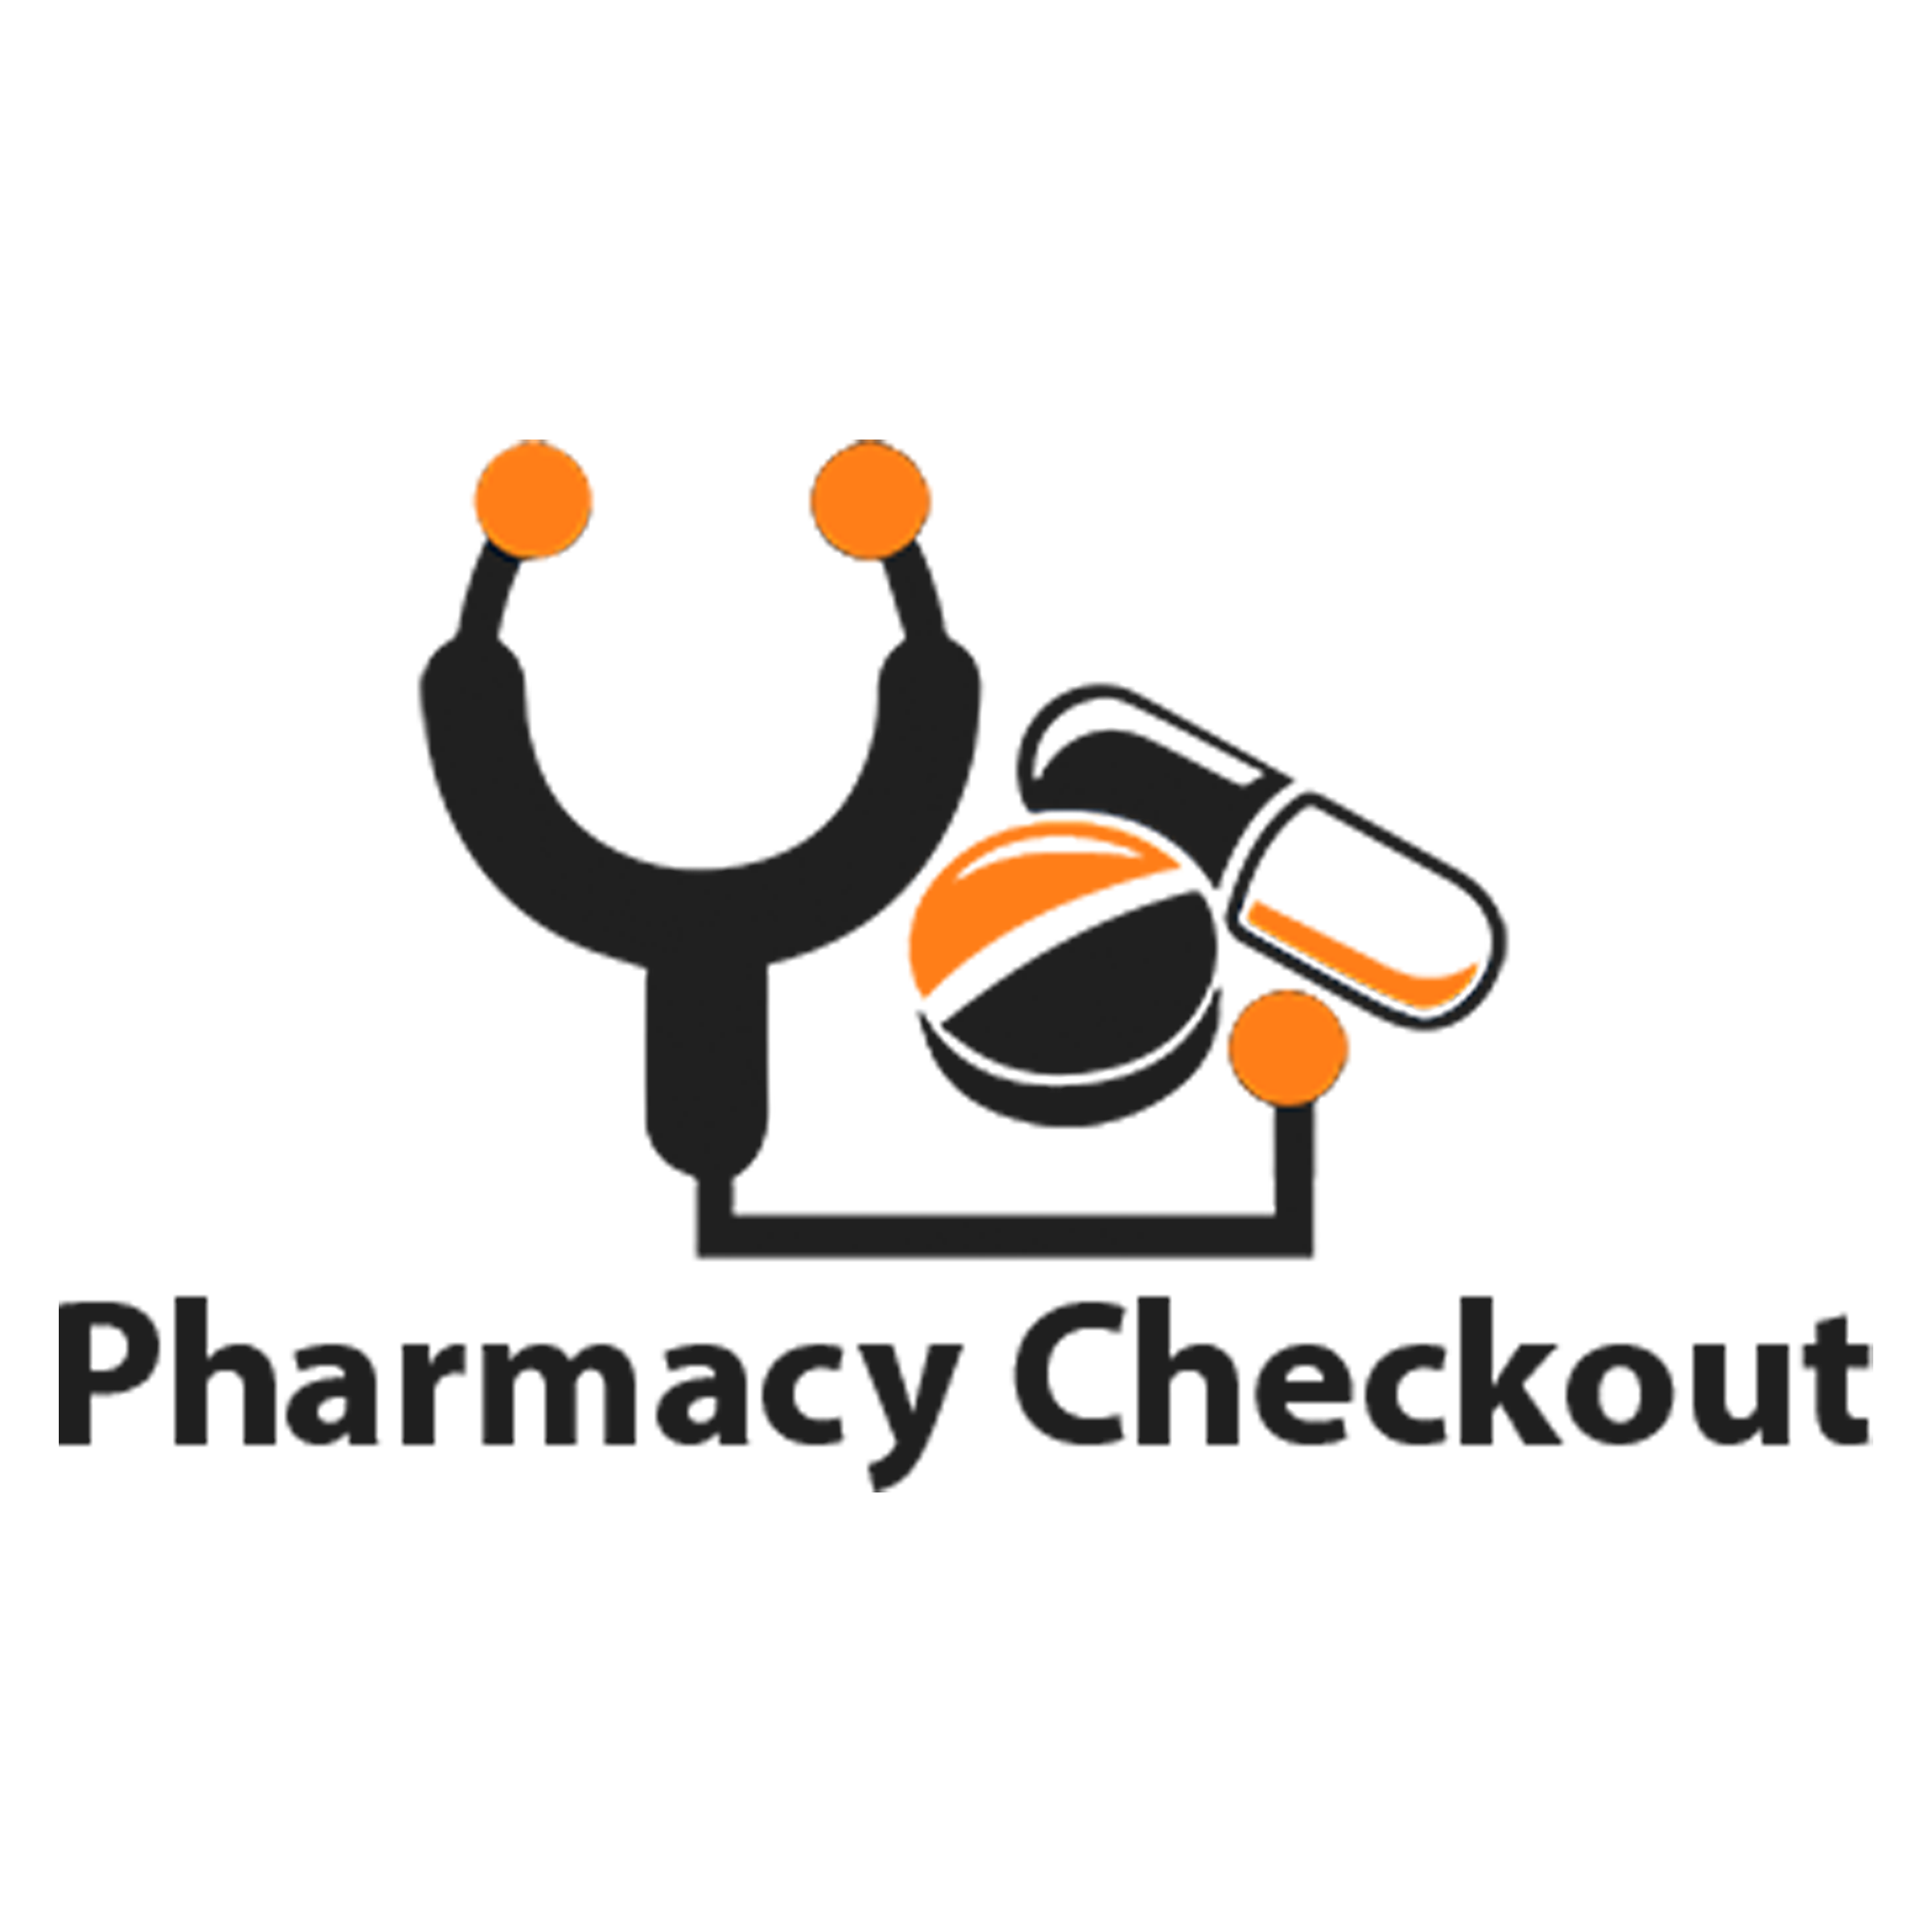 Pharmacy Checkout's Logo